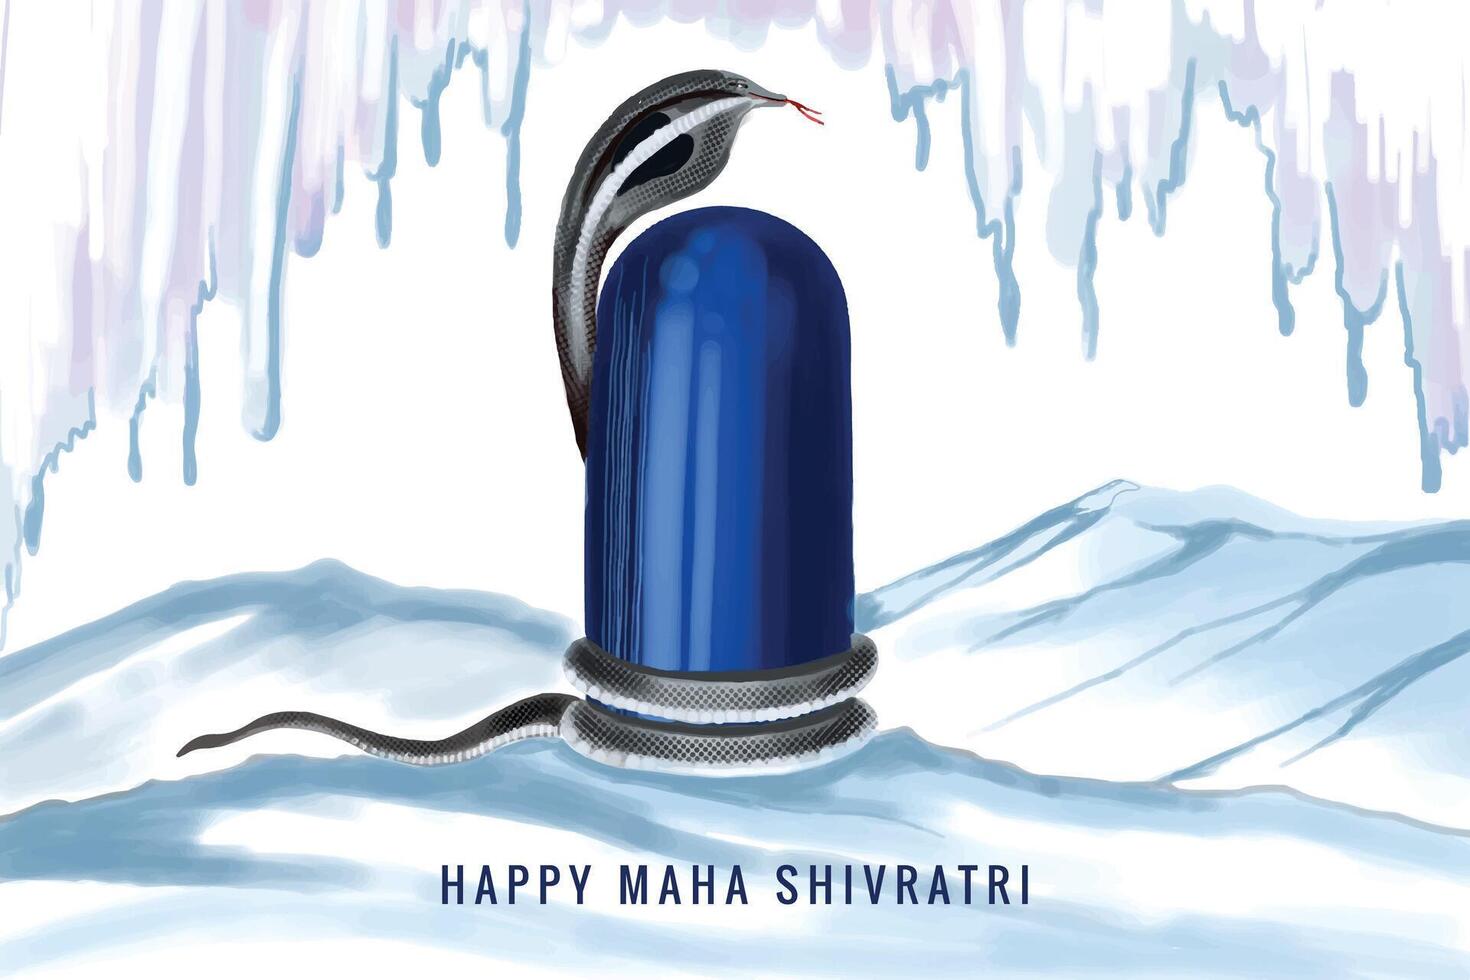 maha shivratri festivalgruß mit shivling kartenhintergrund vektor